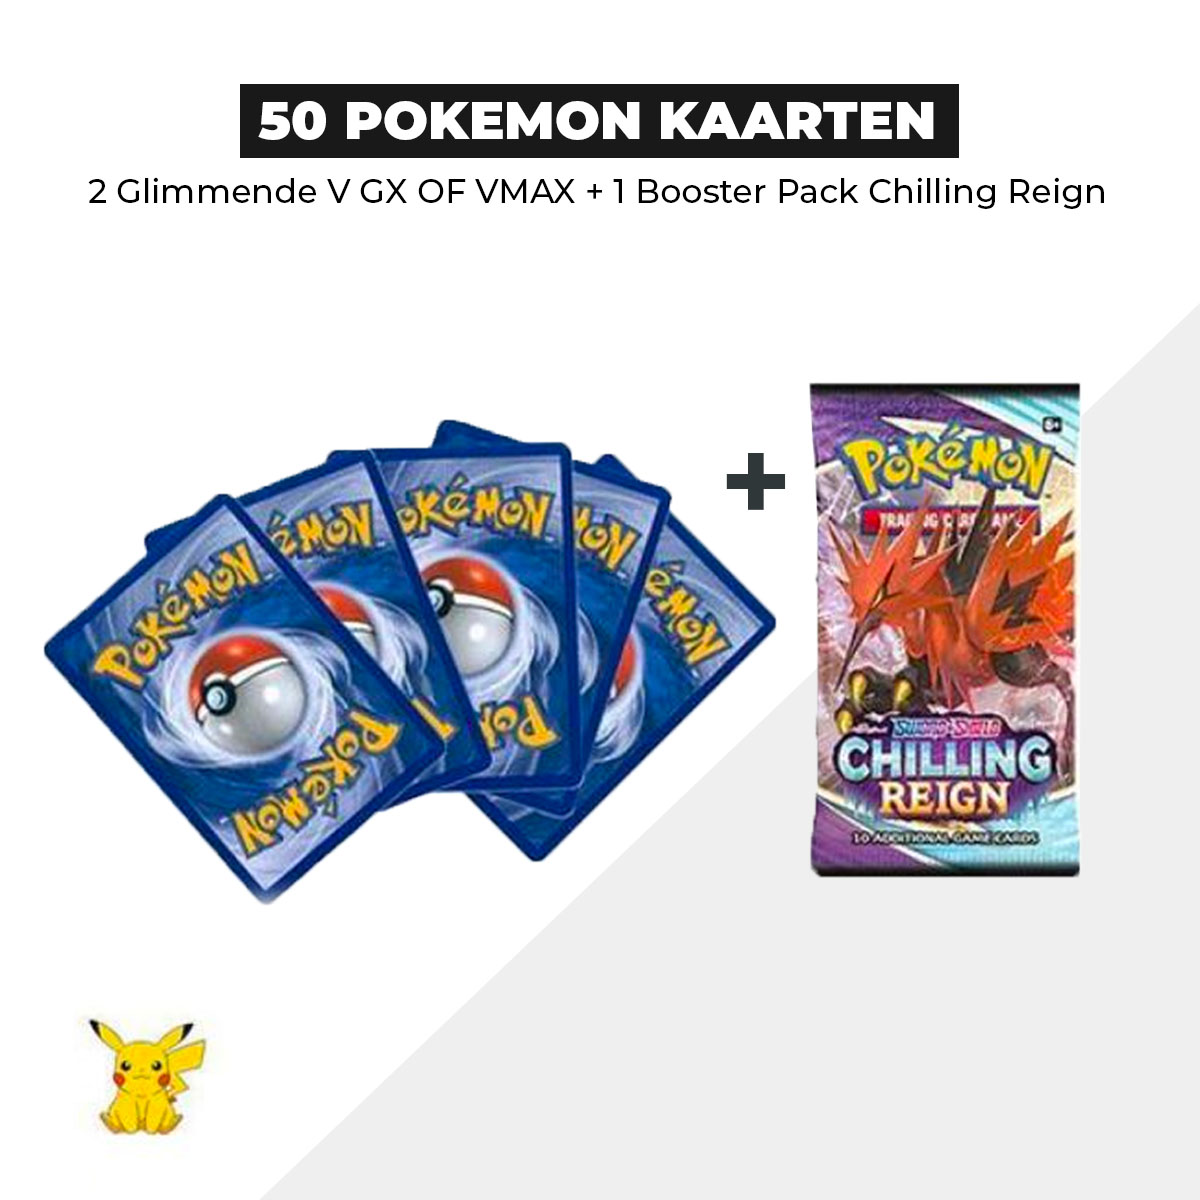 50 Pokémon Kaarten Bundel + 1 Chilling Reign Booster pack